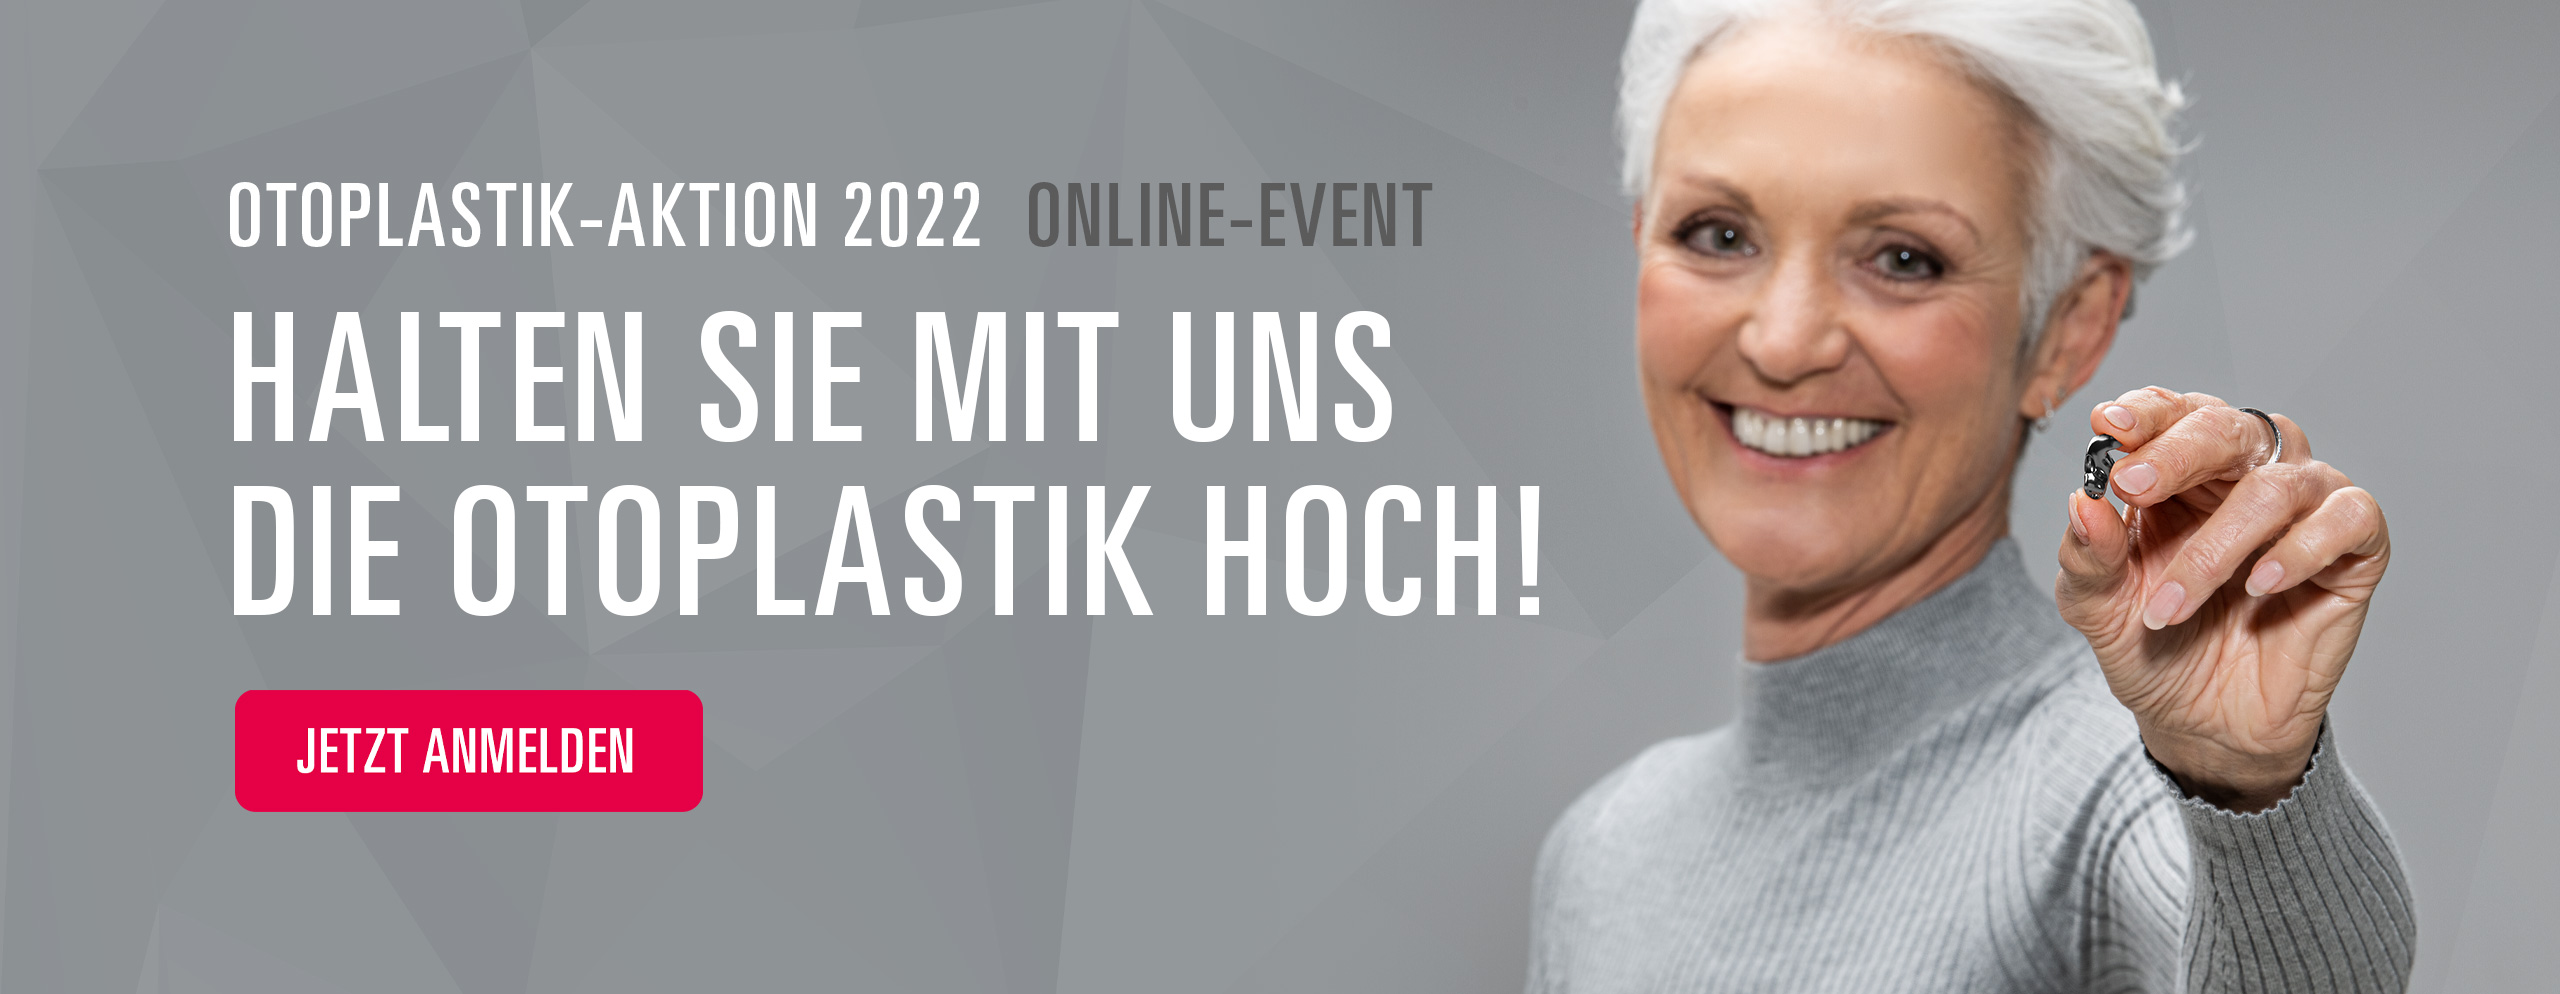 Otoplastik-Aktion 2022 Online-Event